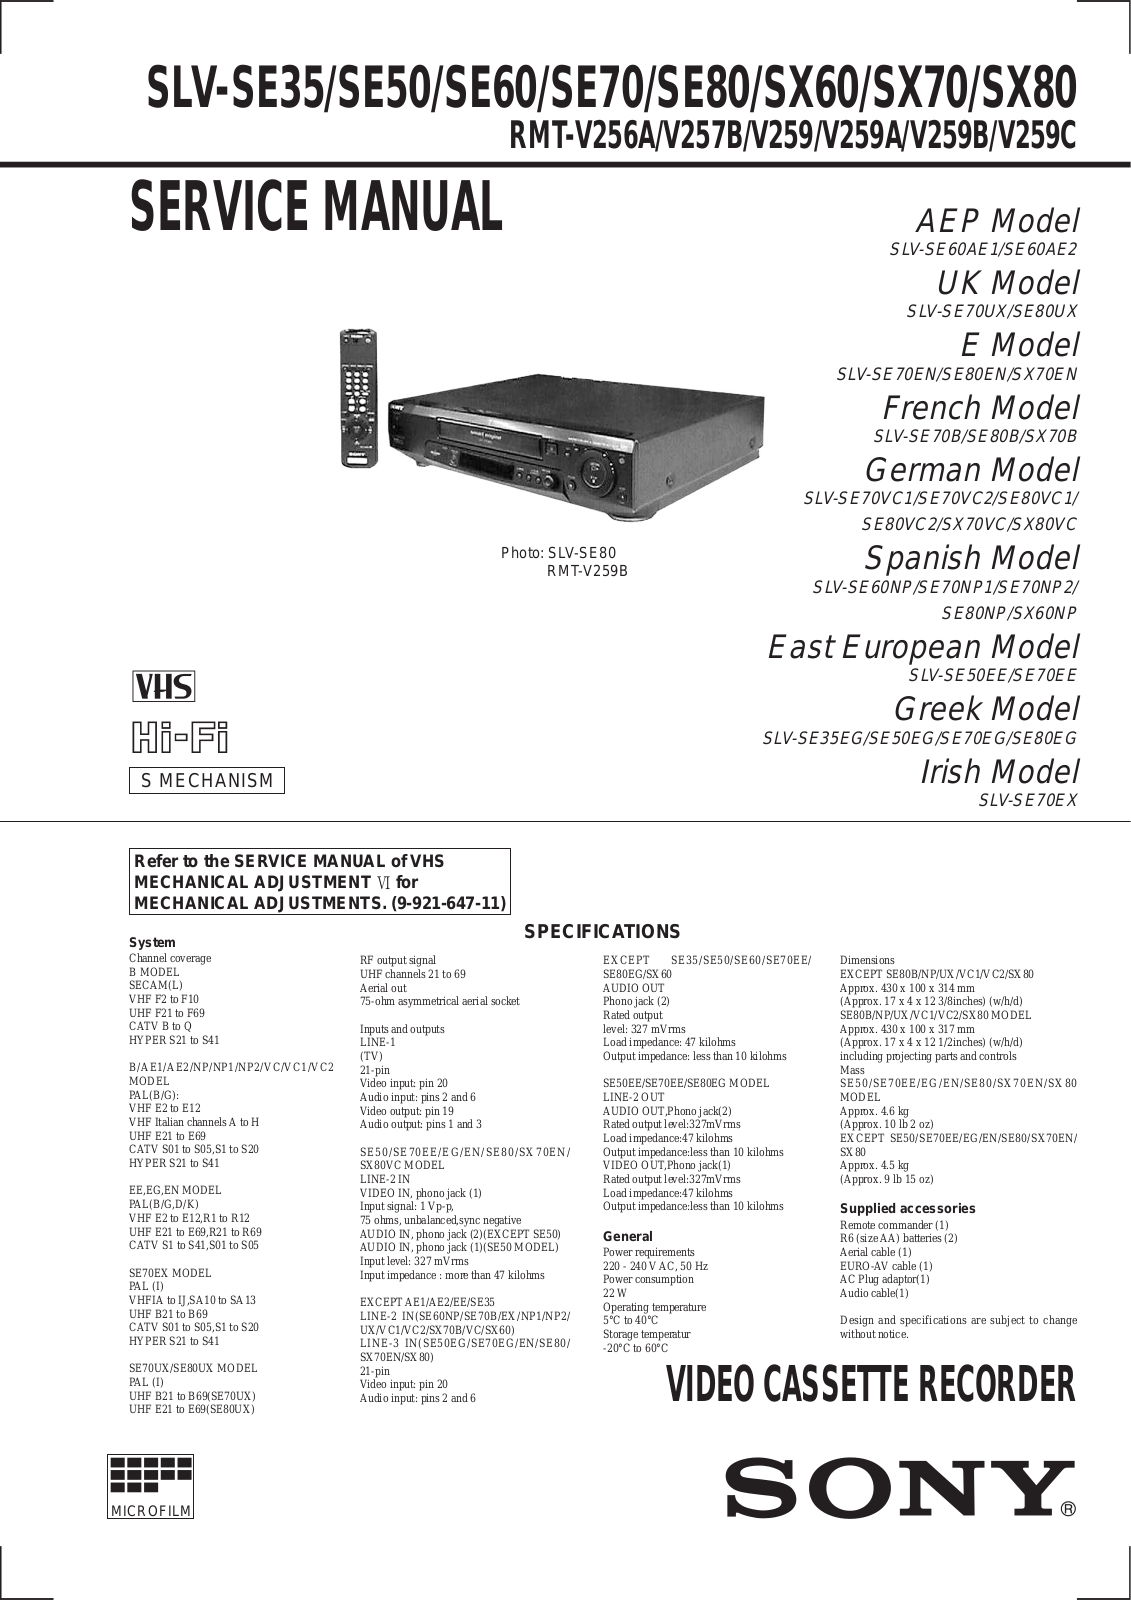 Sony slv-se35, slv-se50, slv-se60, slv-se70, slv-se80 Service Manual